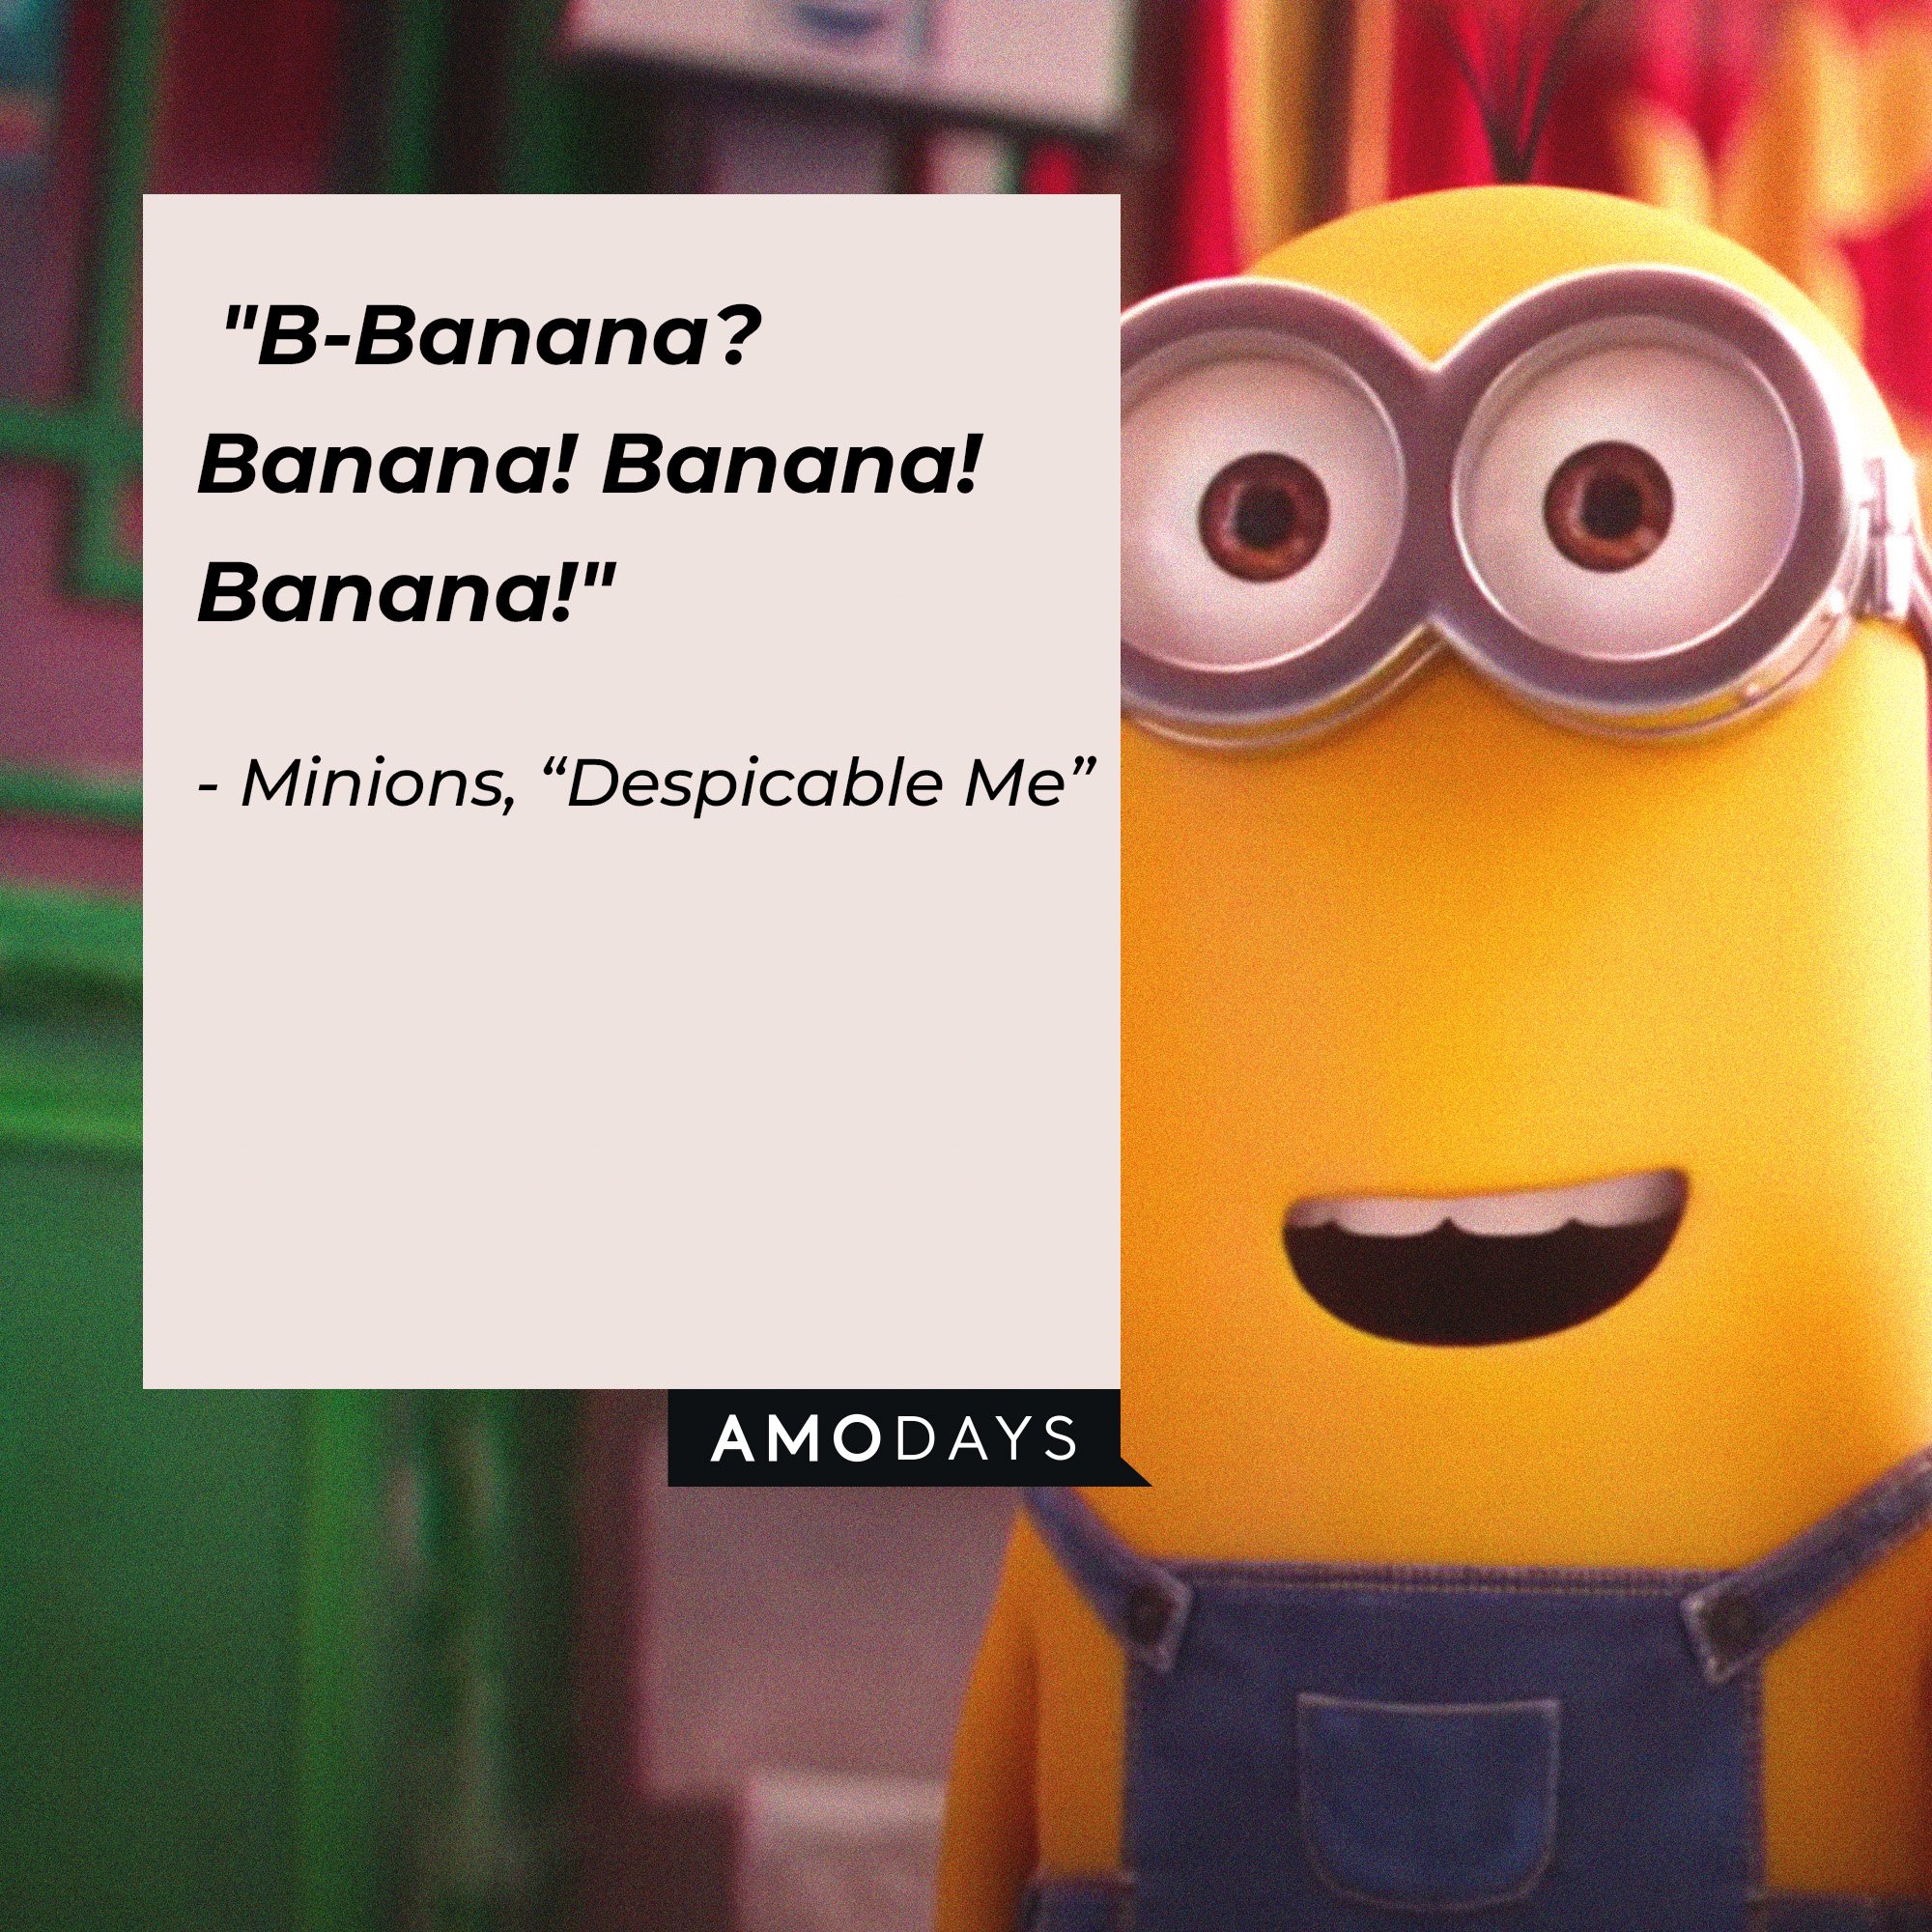 Minions' quote: "B-Banana? Banana! Banana! Banana!" | Image: AmoDays